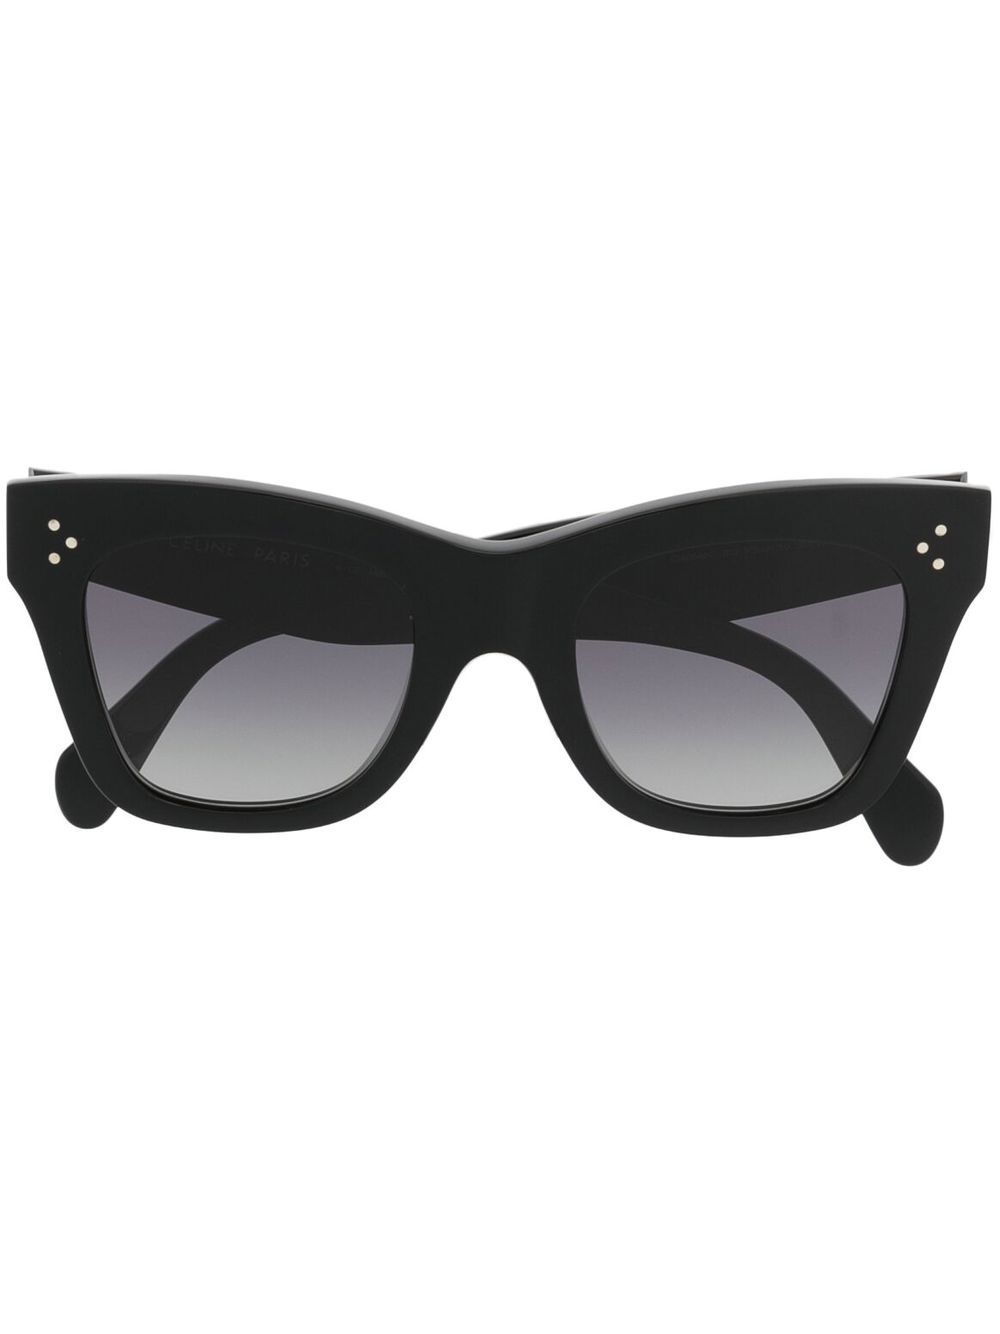 Chunky cat-eye sunglasses